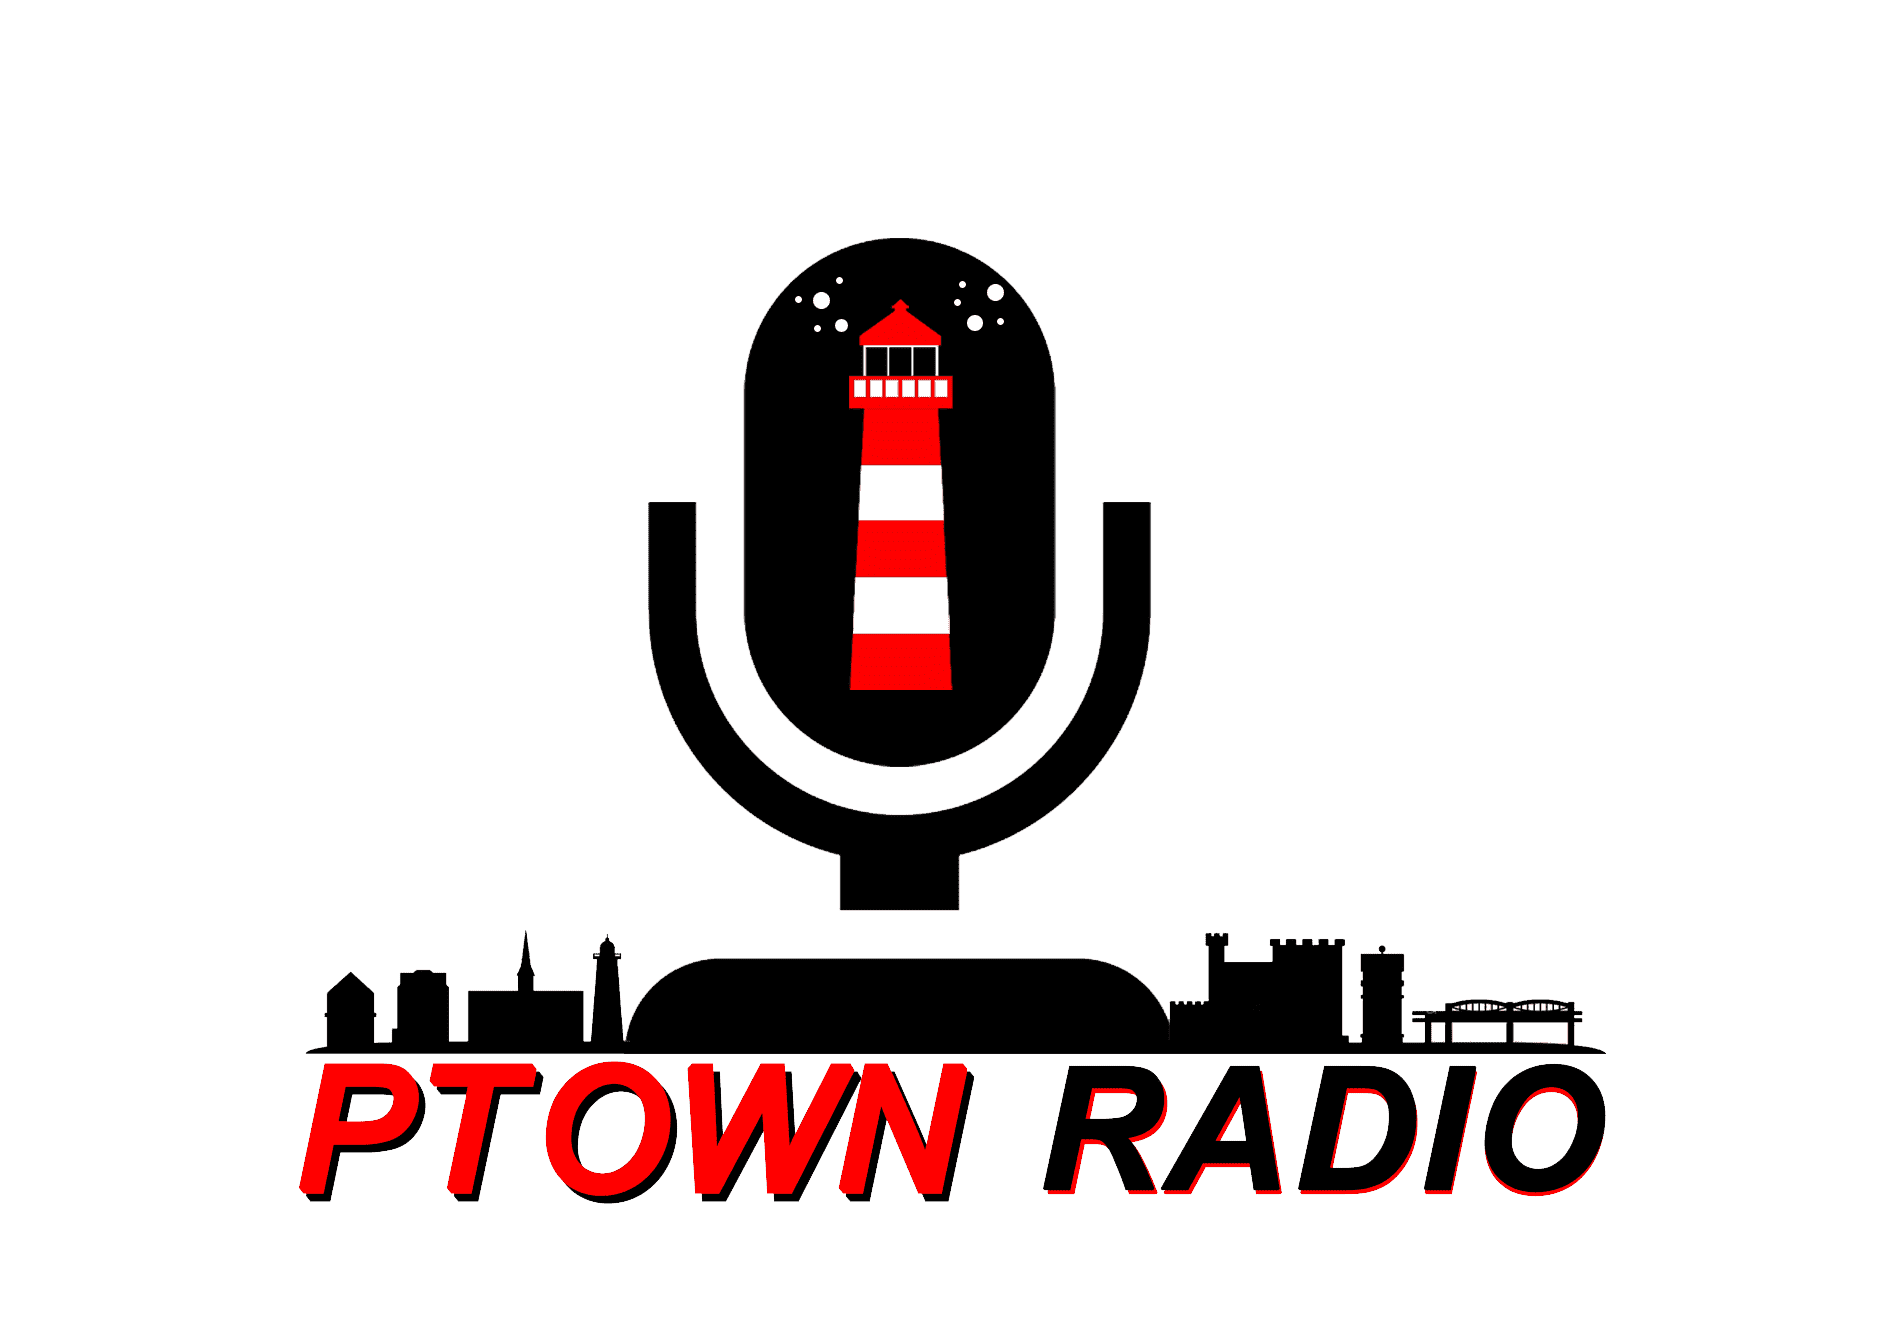 Ptown Radio CIC